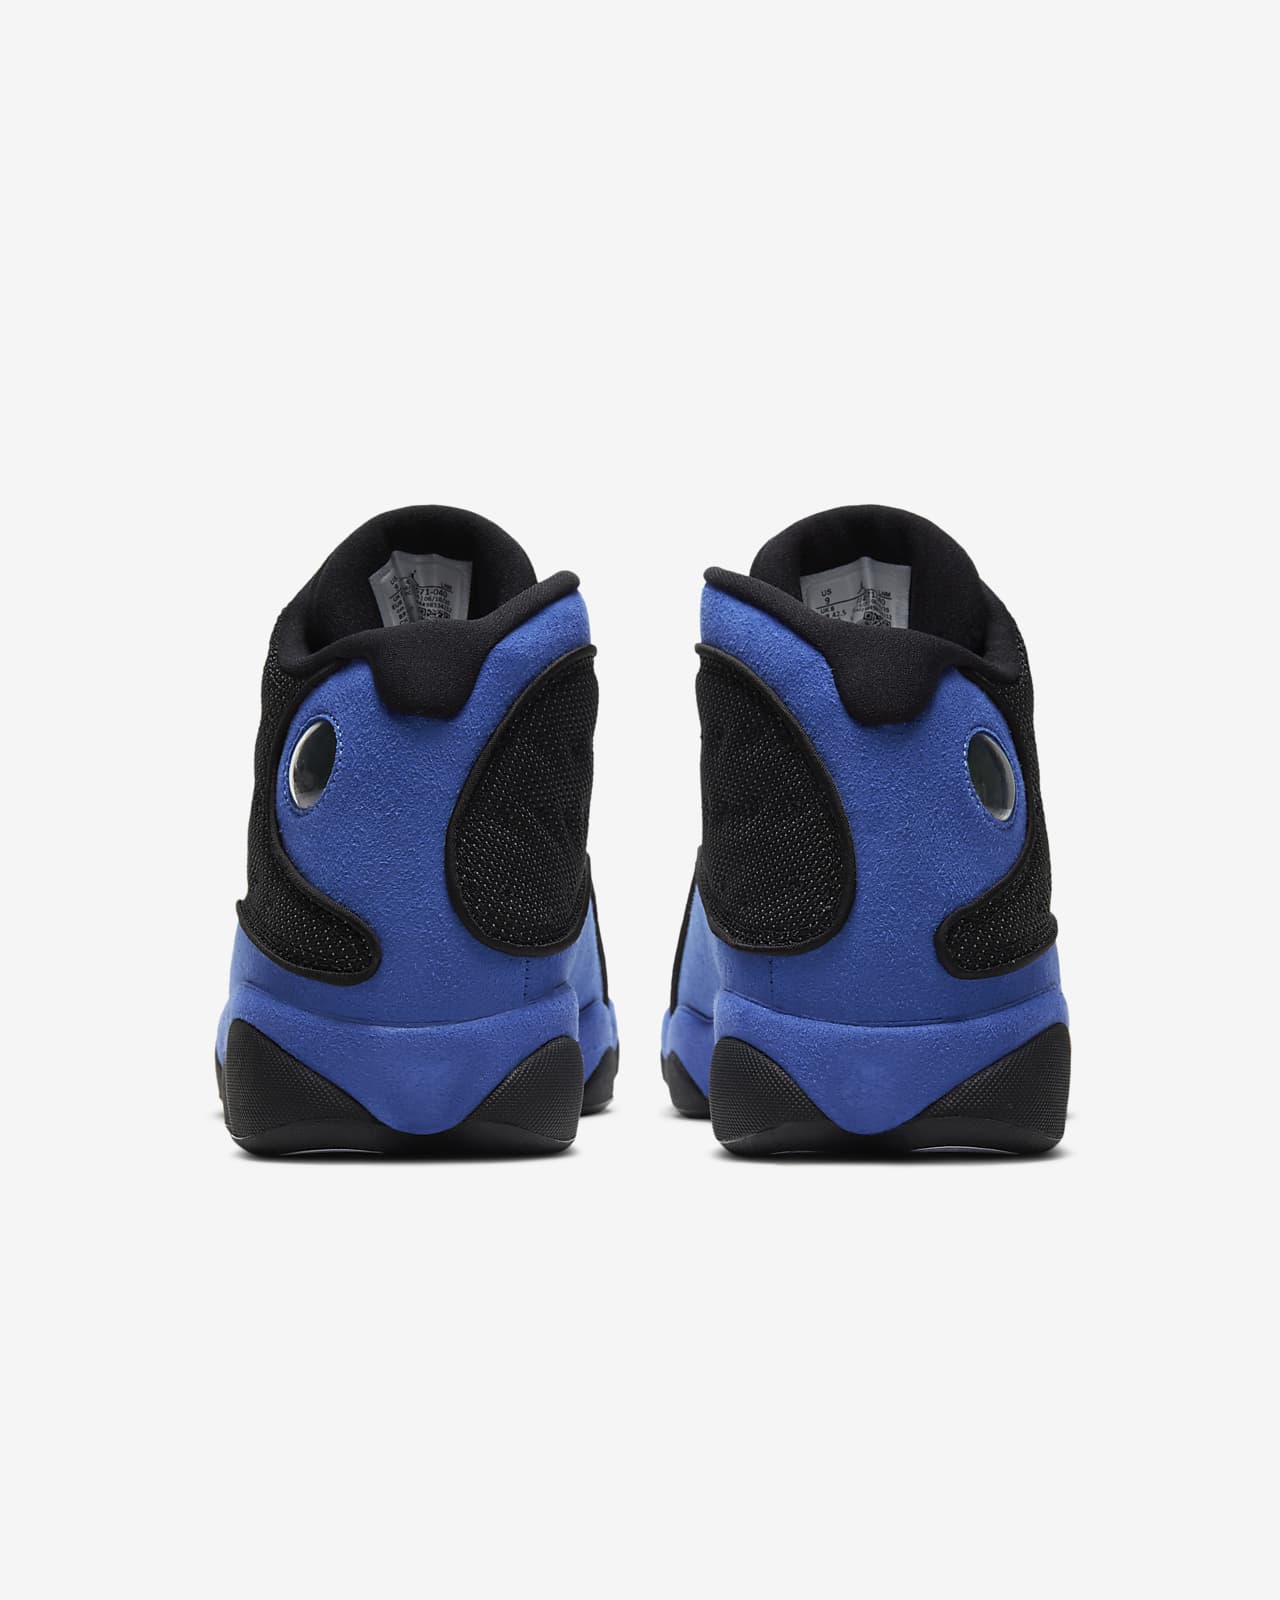 jordan 13 shoes for sale online